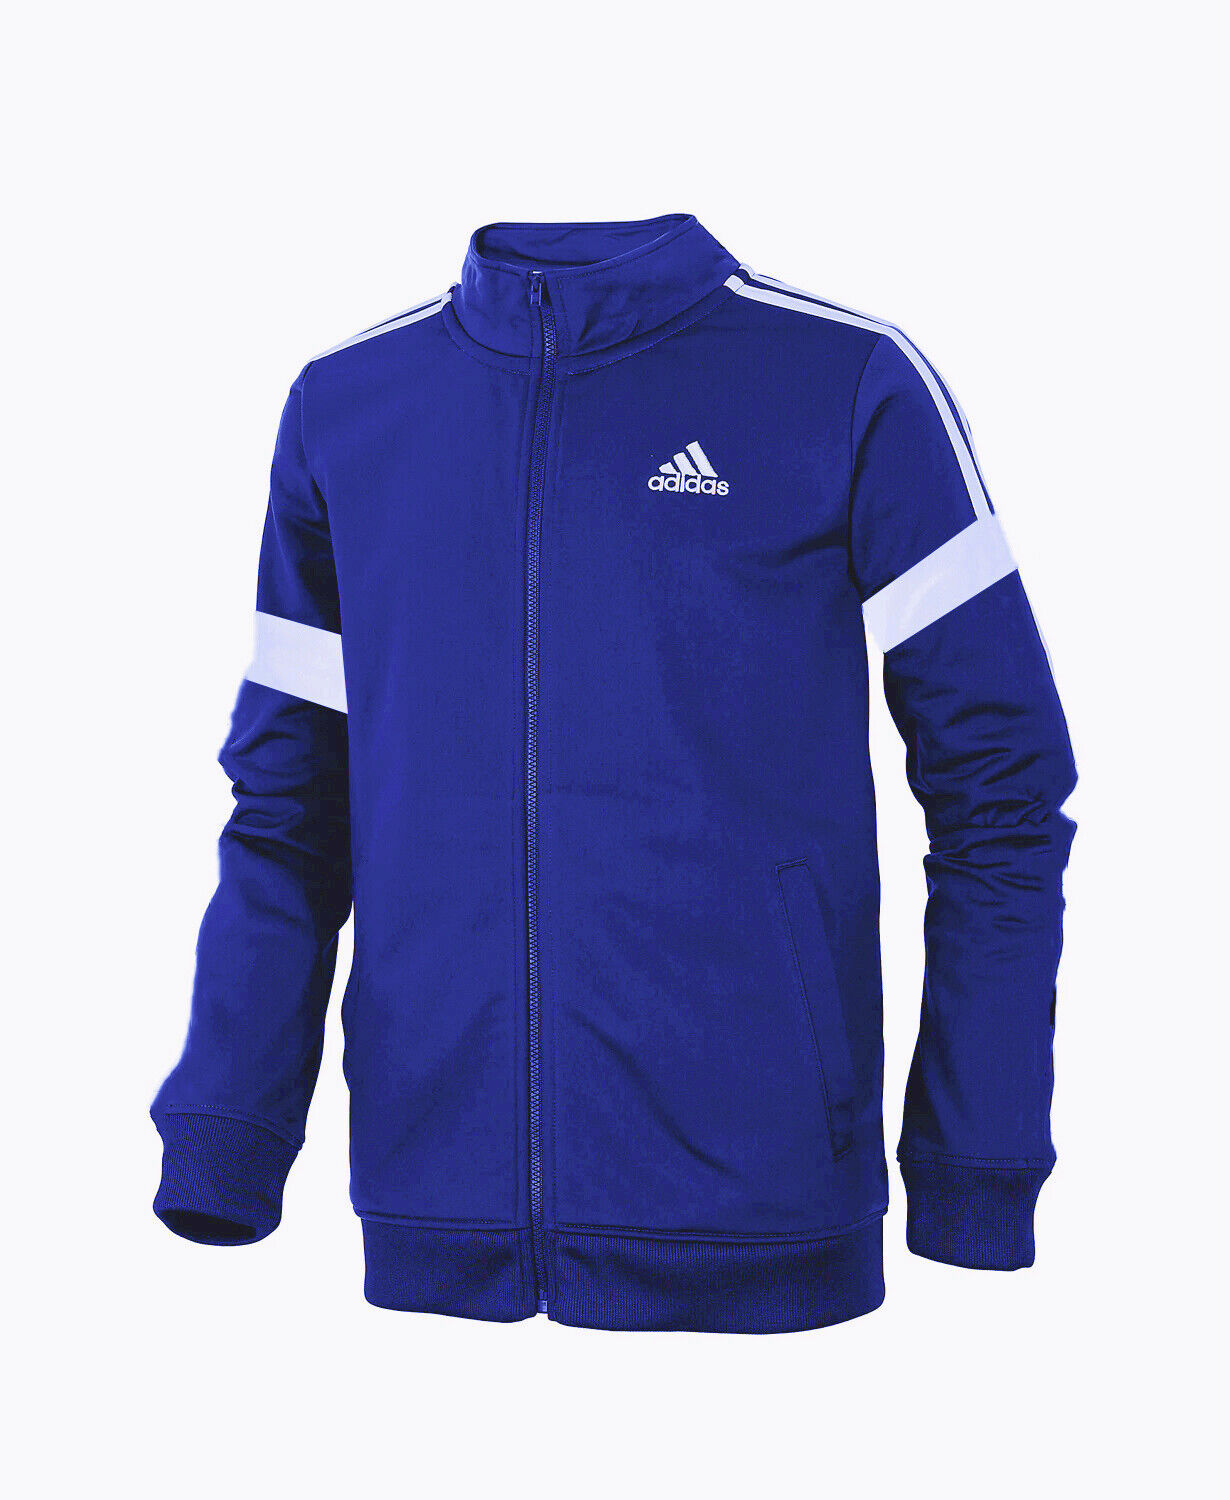 adidas Dark Royal Blue 3 Stripe Track Jacket Full Zip Size 8 Small 